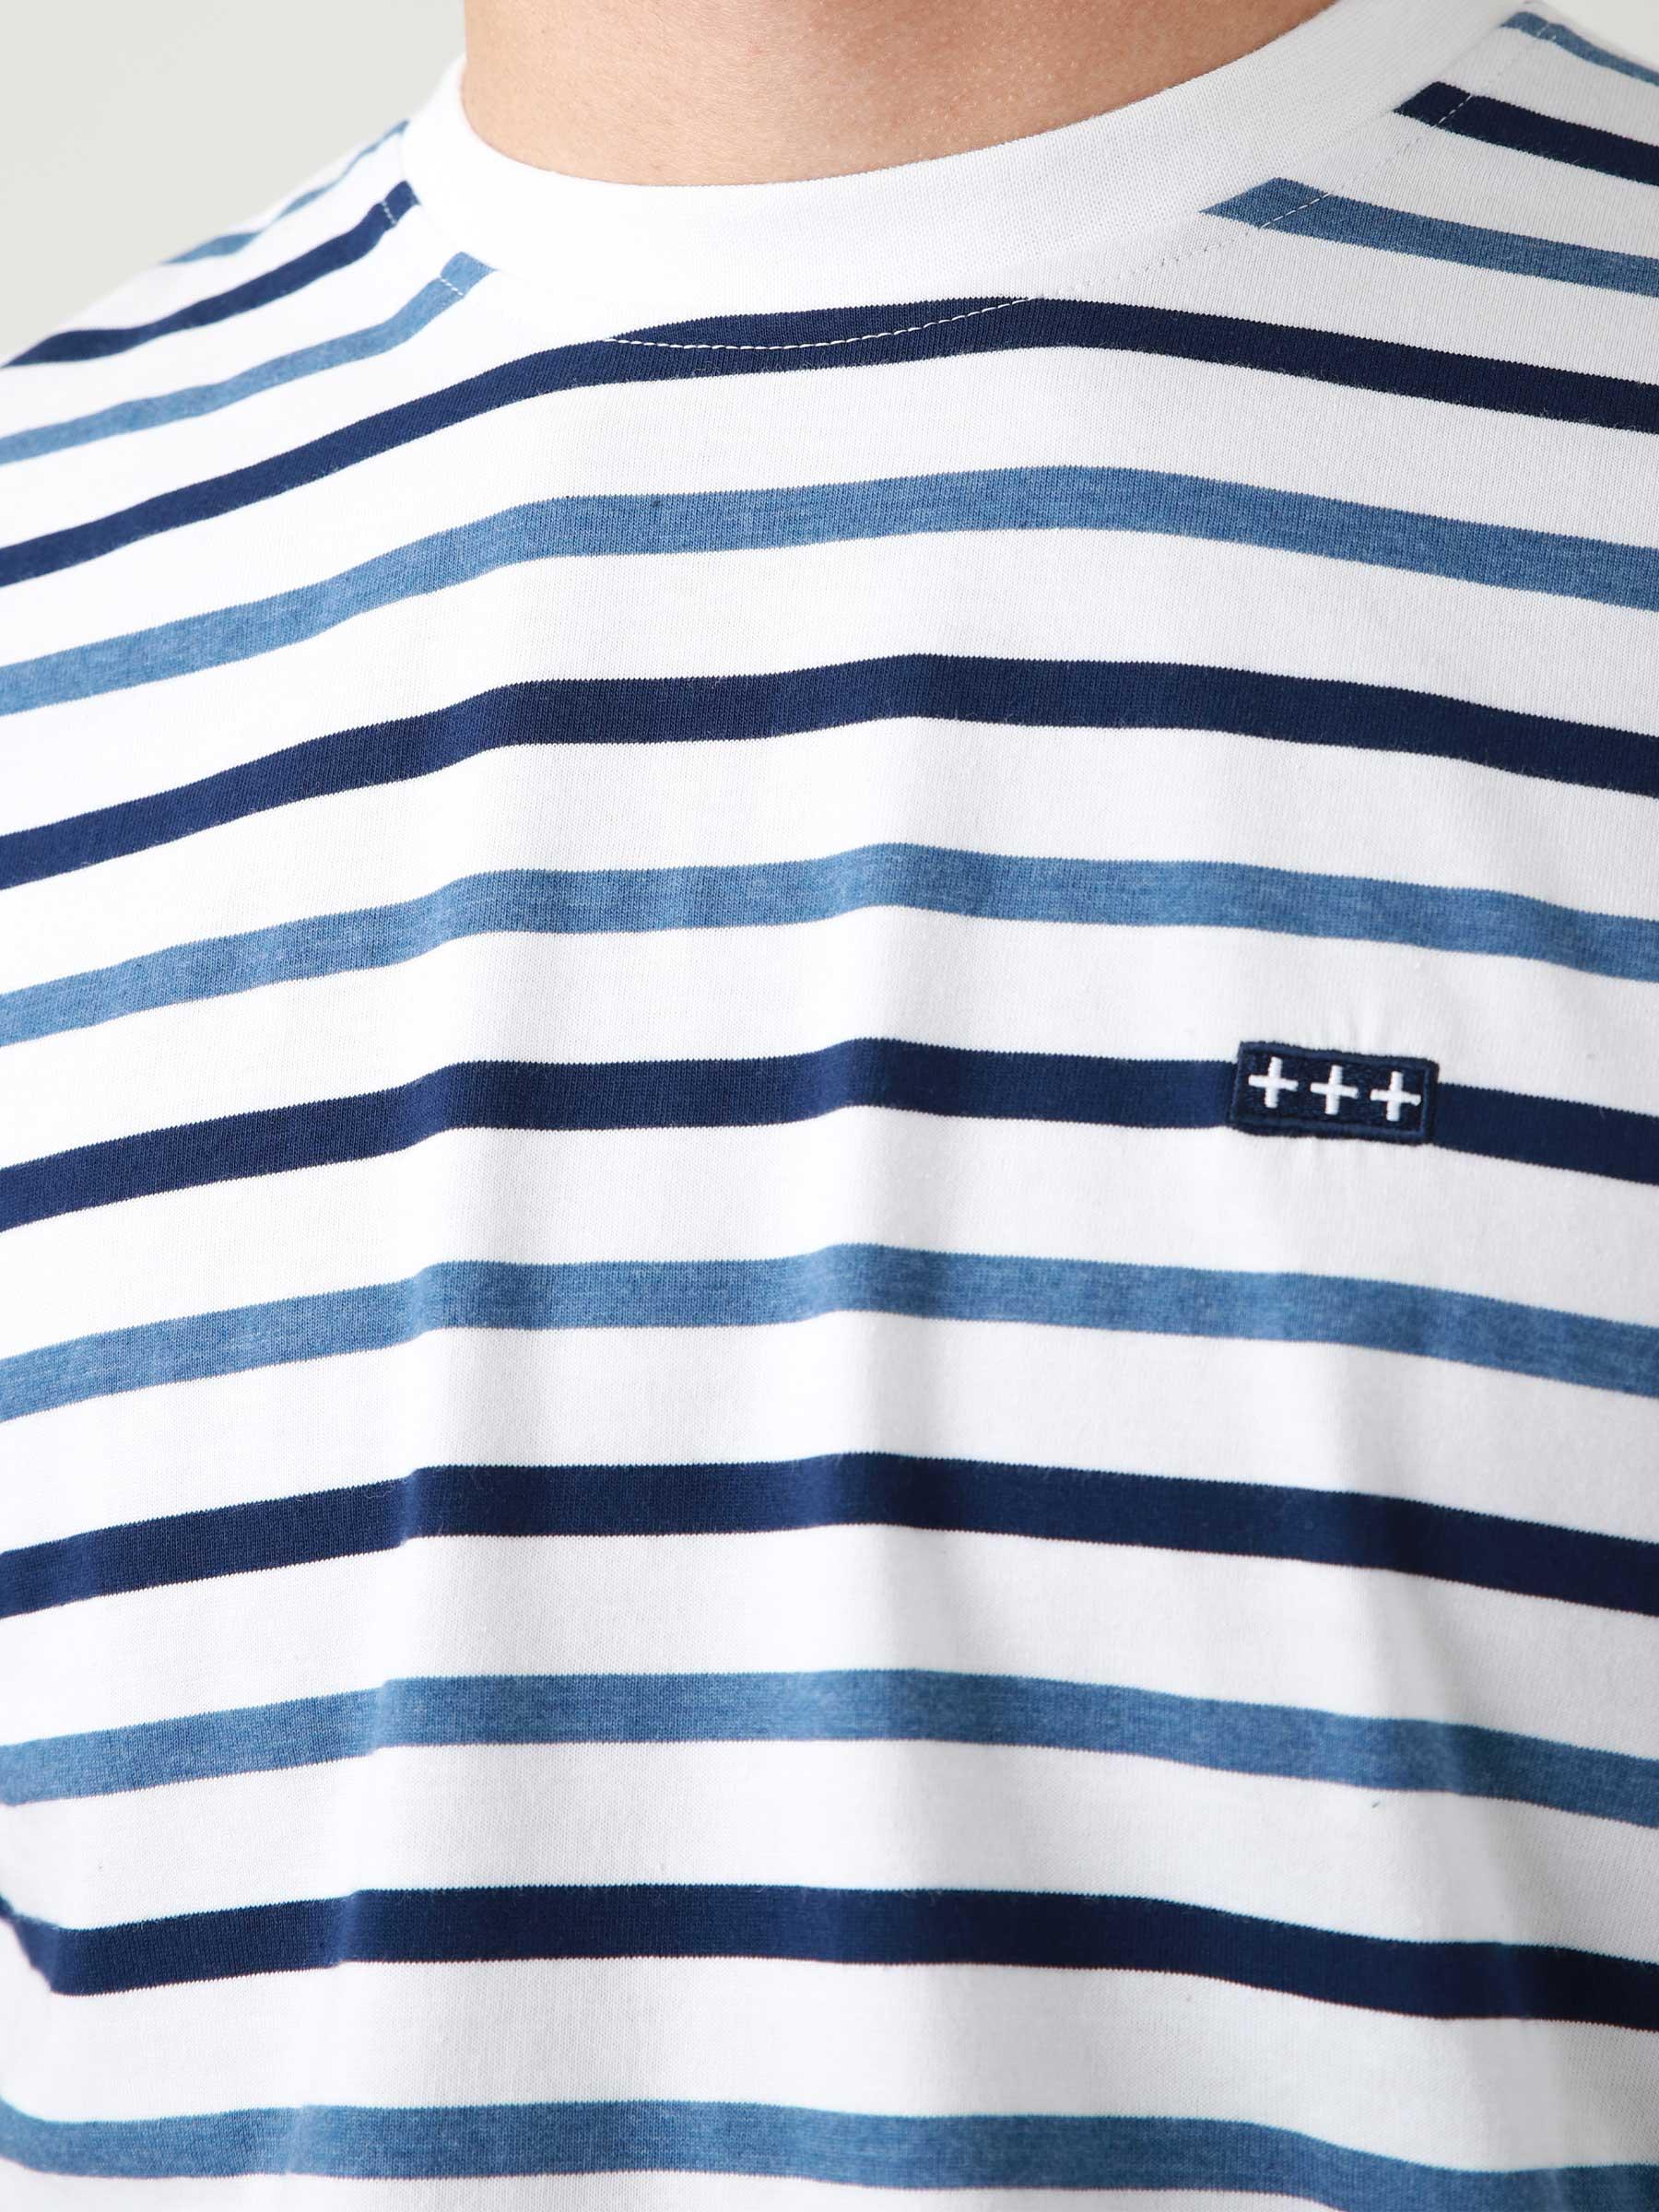 QB601 Stripe T-shirt White Navy Blue